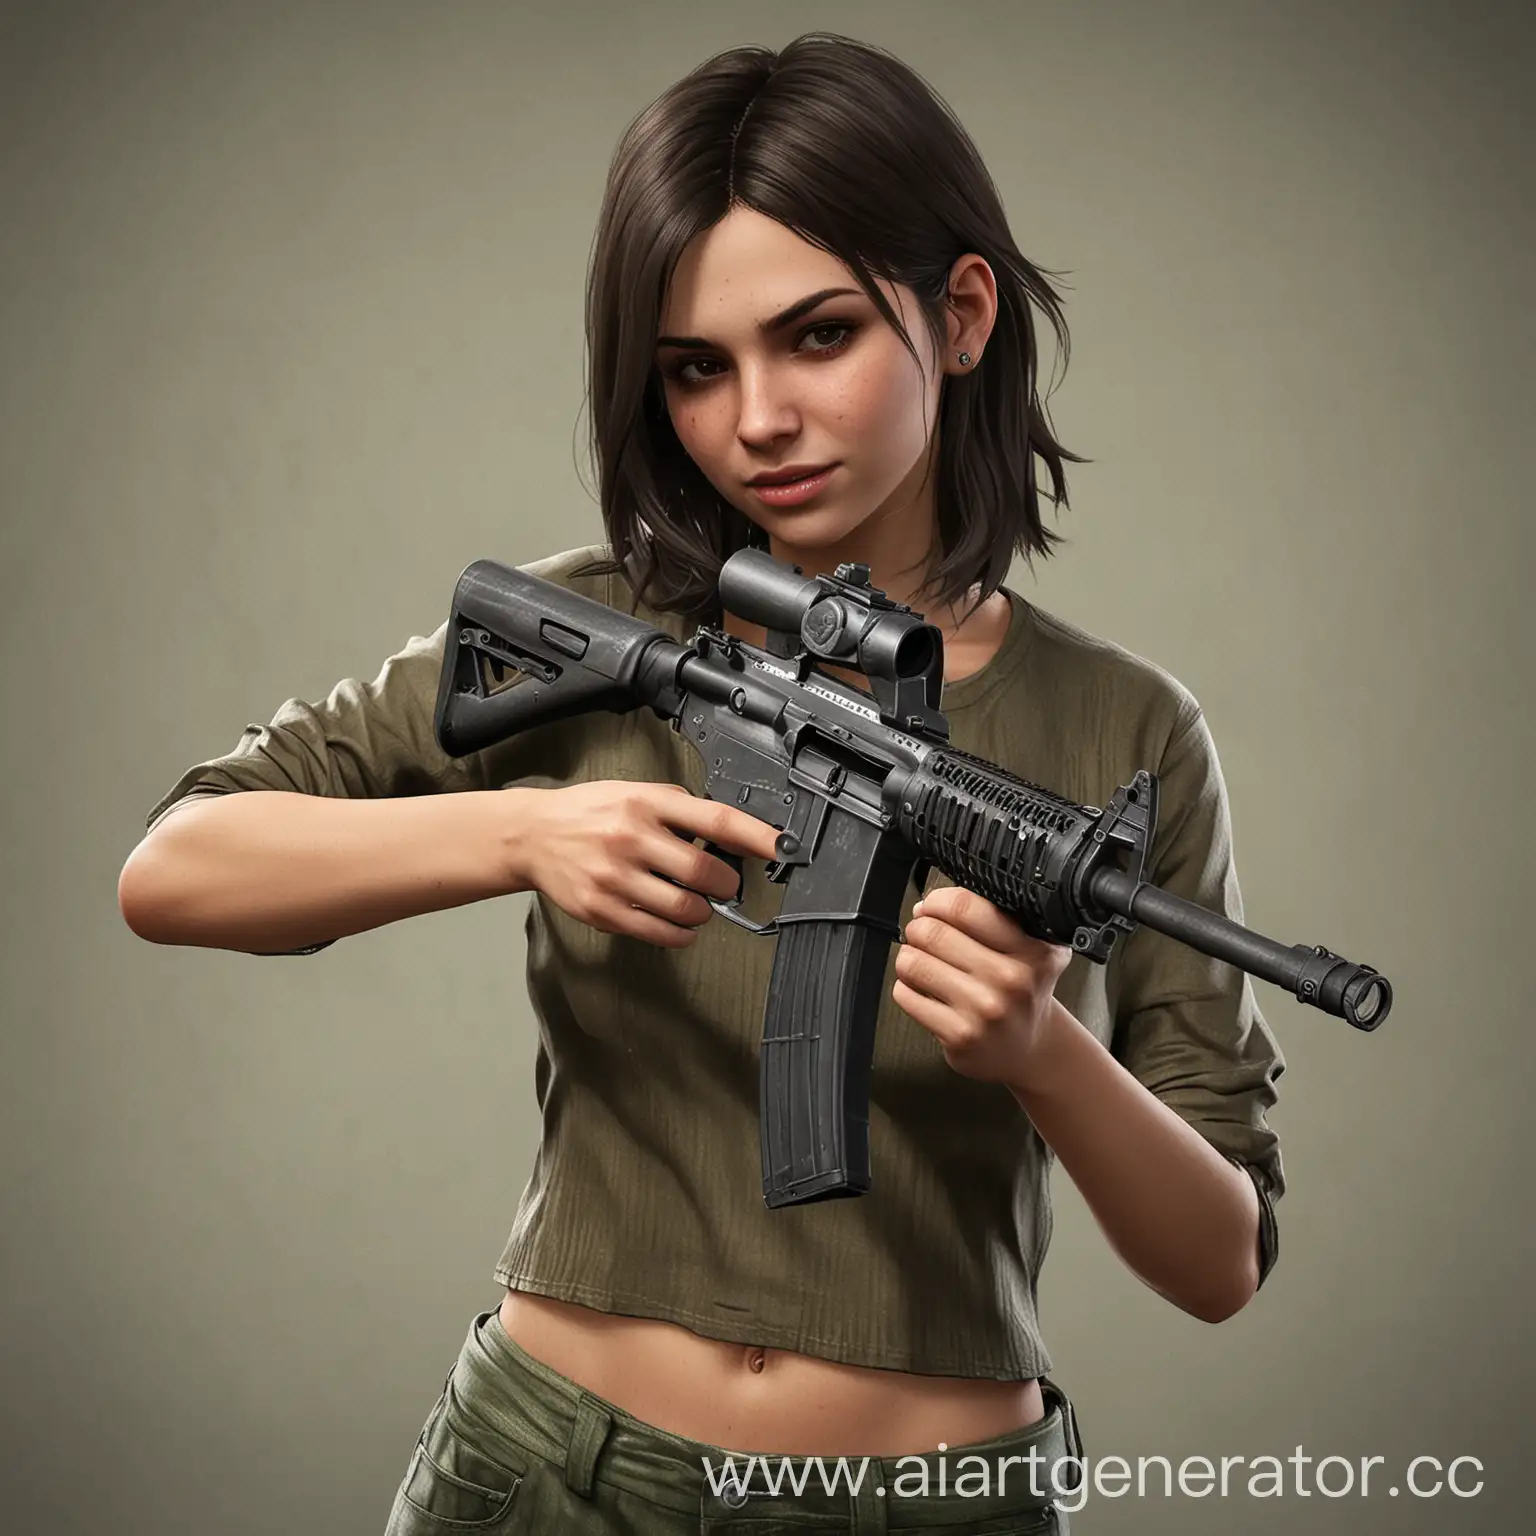 Girl-Holding-M416-Gun-in-GTA-5